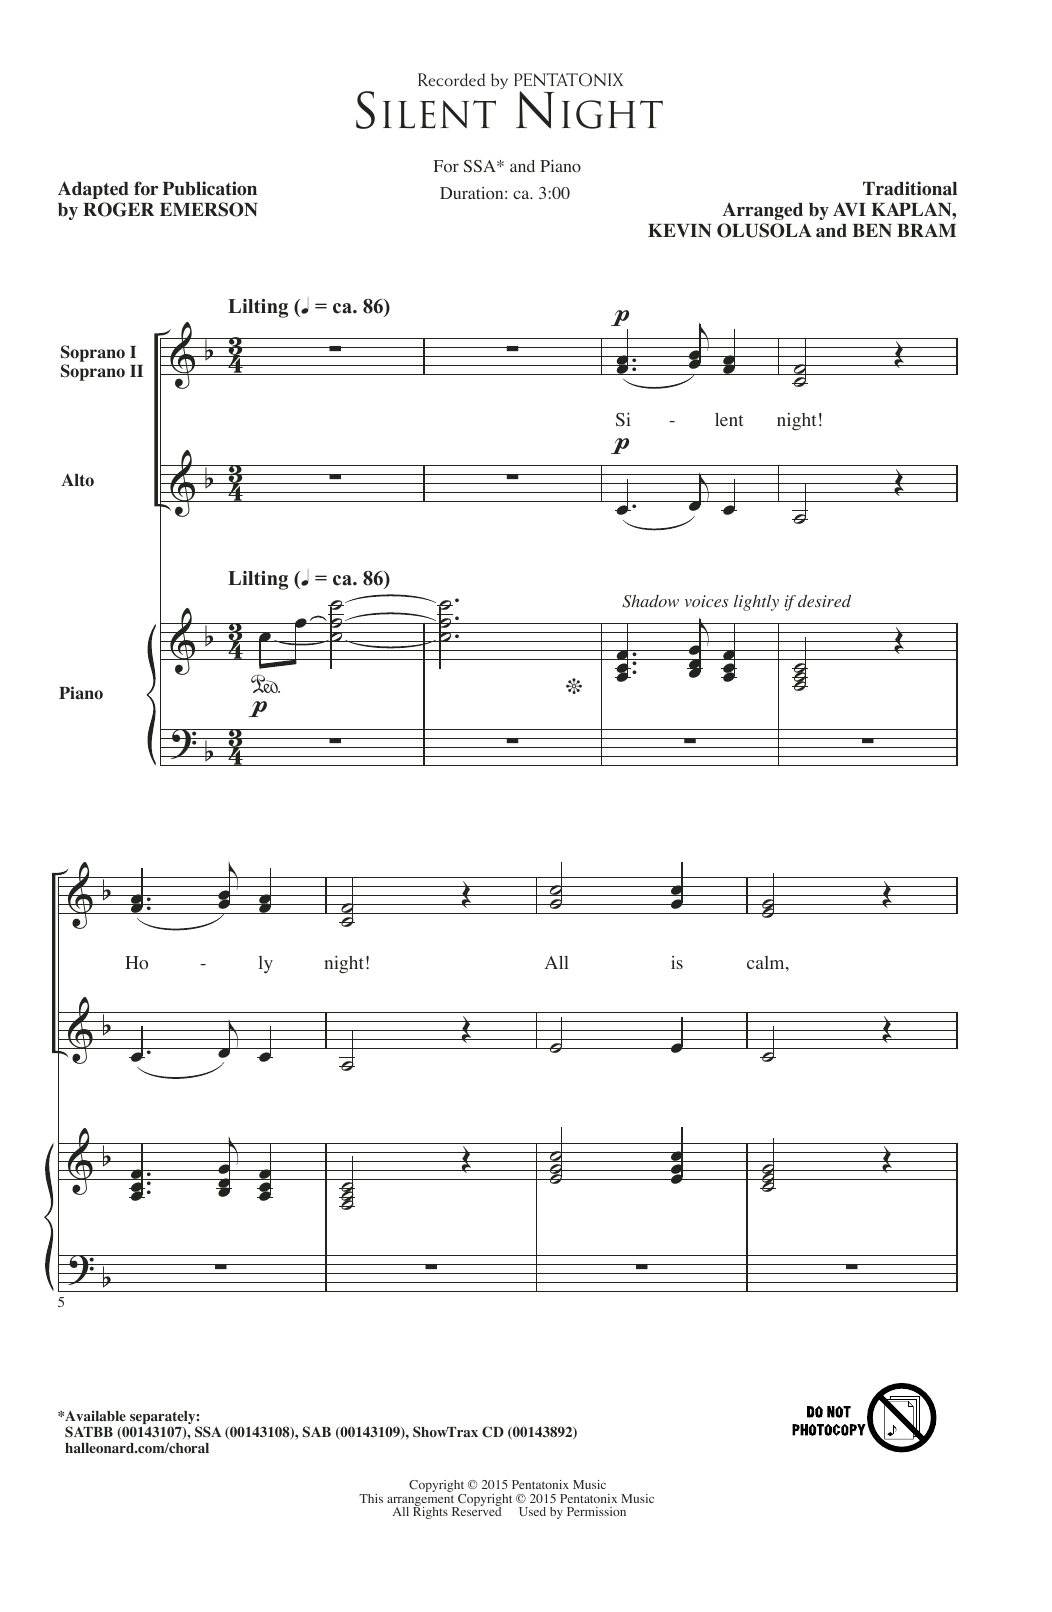 Pentatonix Silent Night (adapt. Roger Emerson) Sheet Music Notes & Chords for SAB - Download or Print PDF